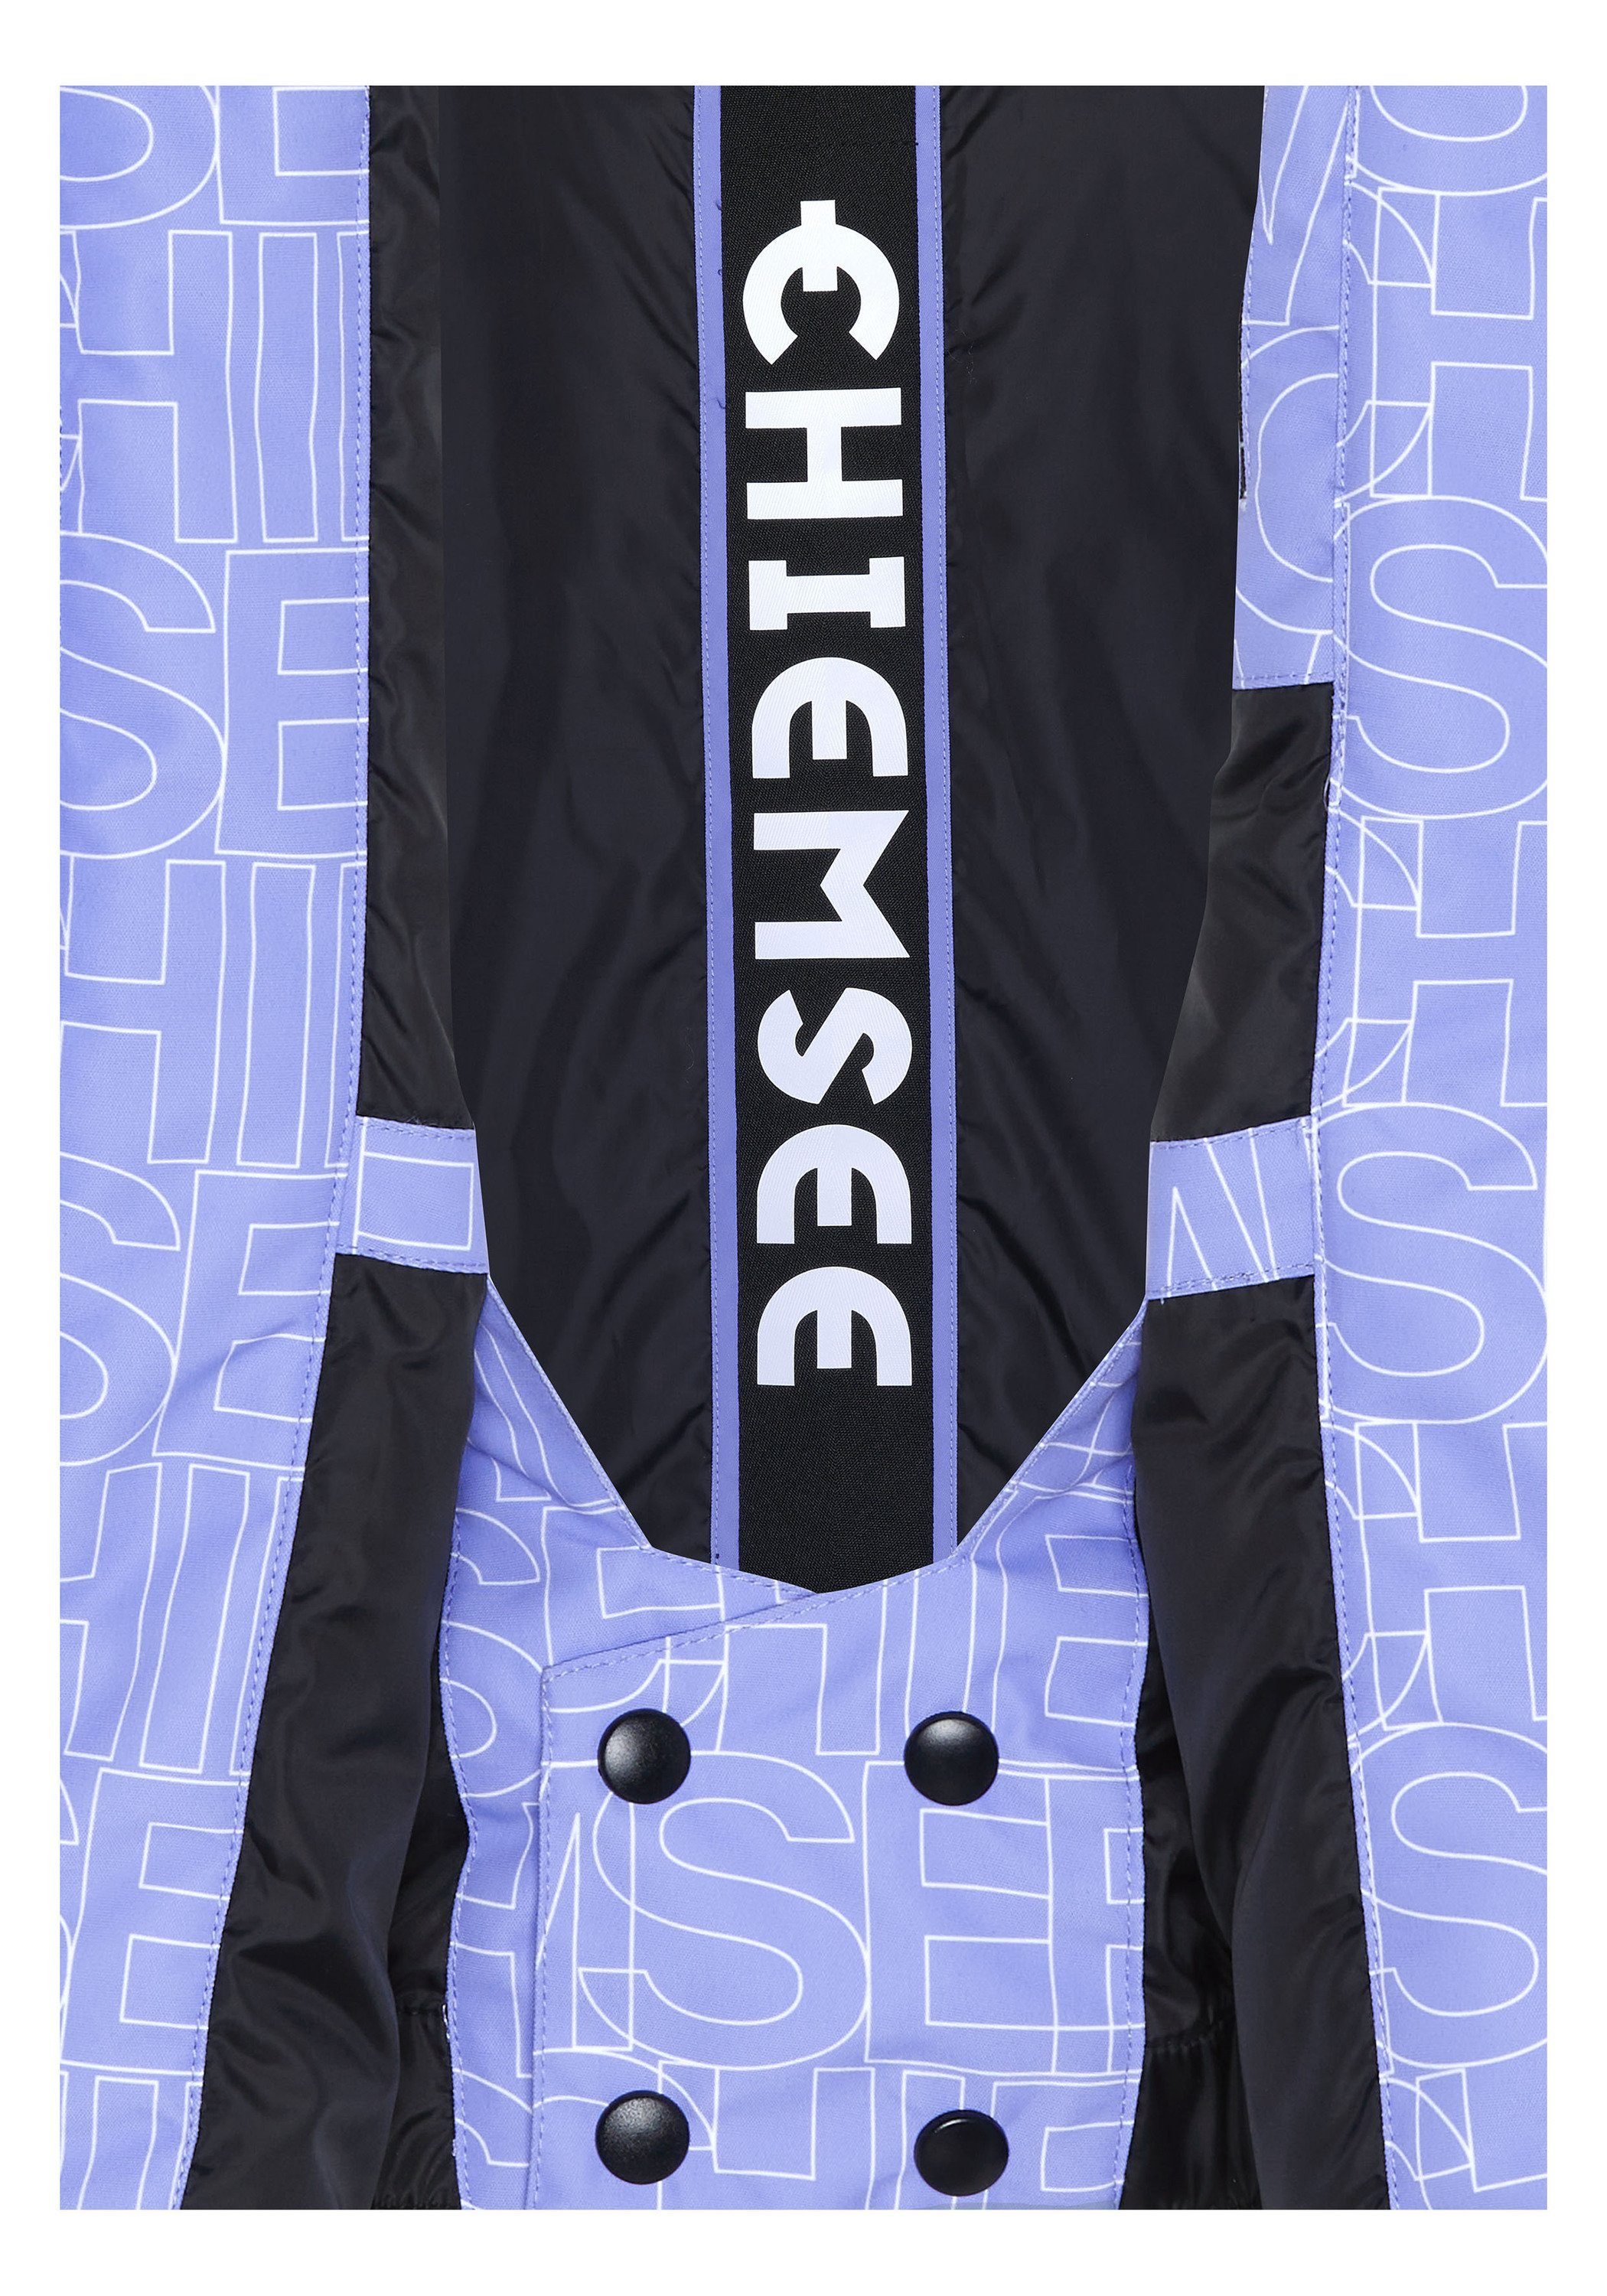 Chiemsee Blue/White Medium 1 mit Skijacke Skijacke Alloverprint